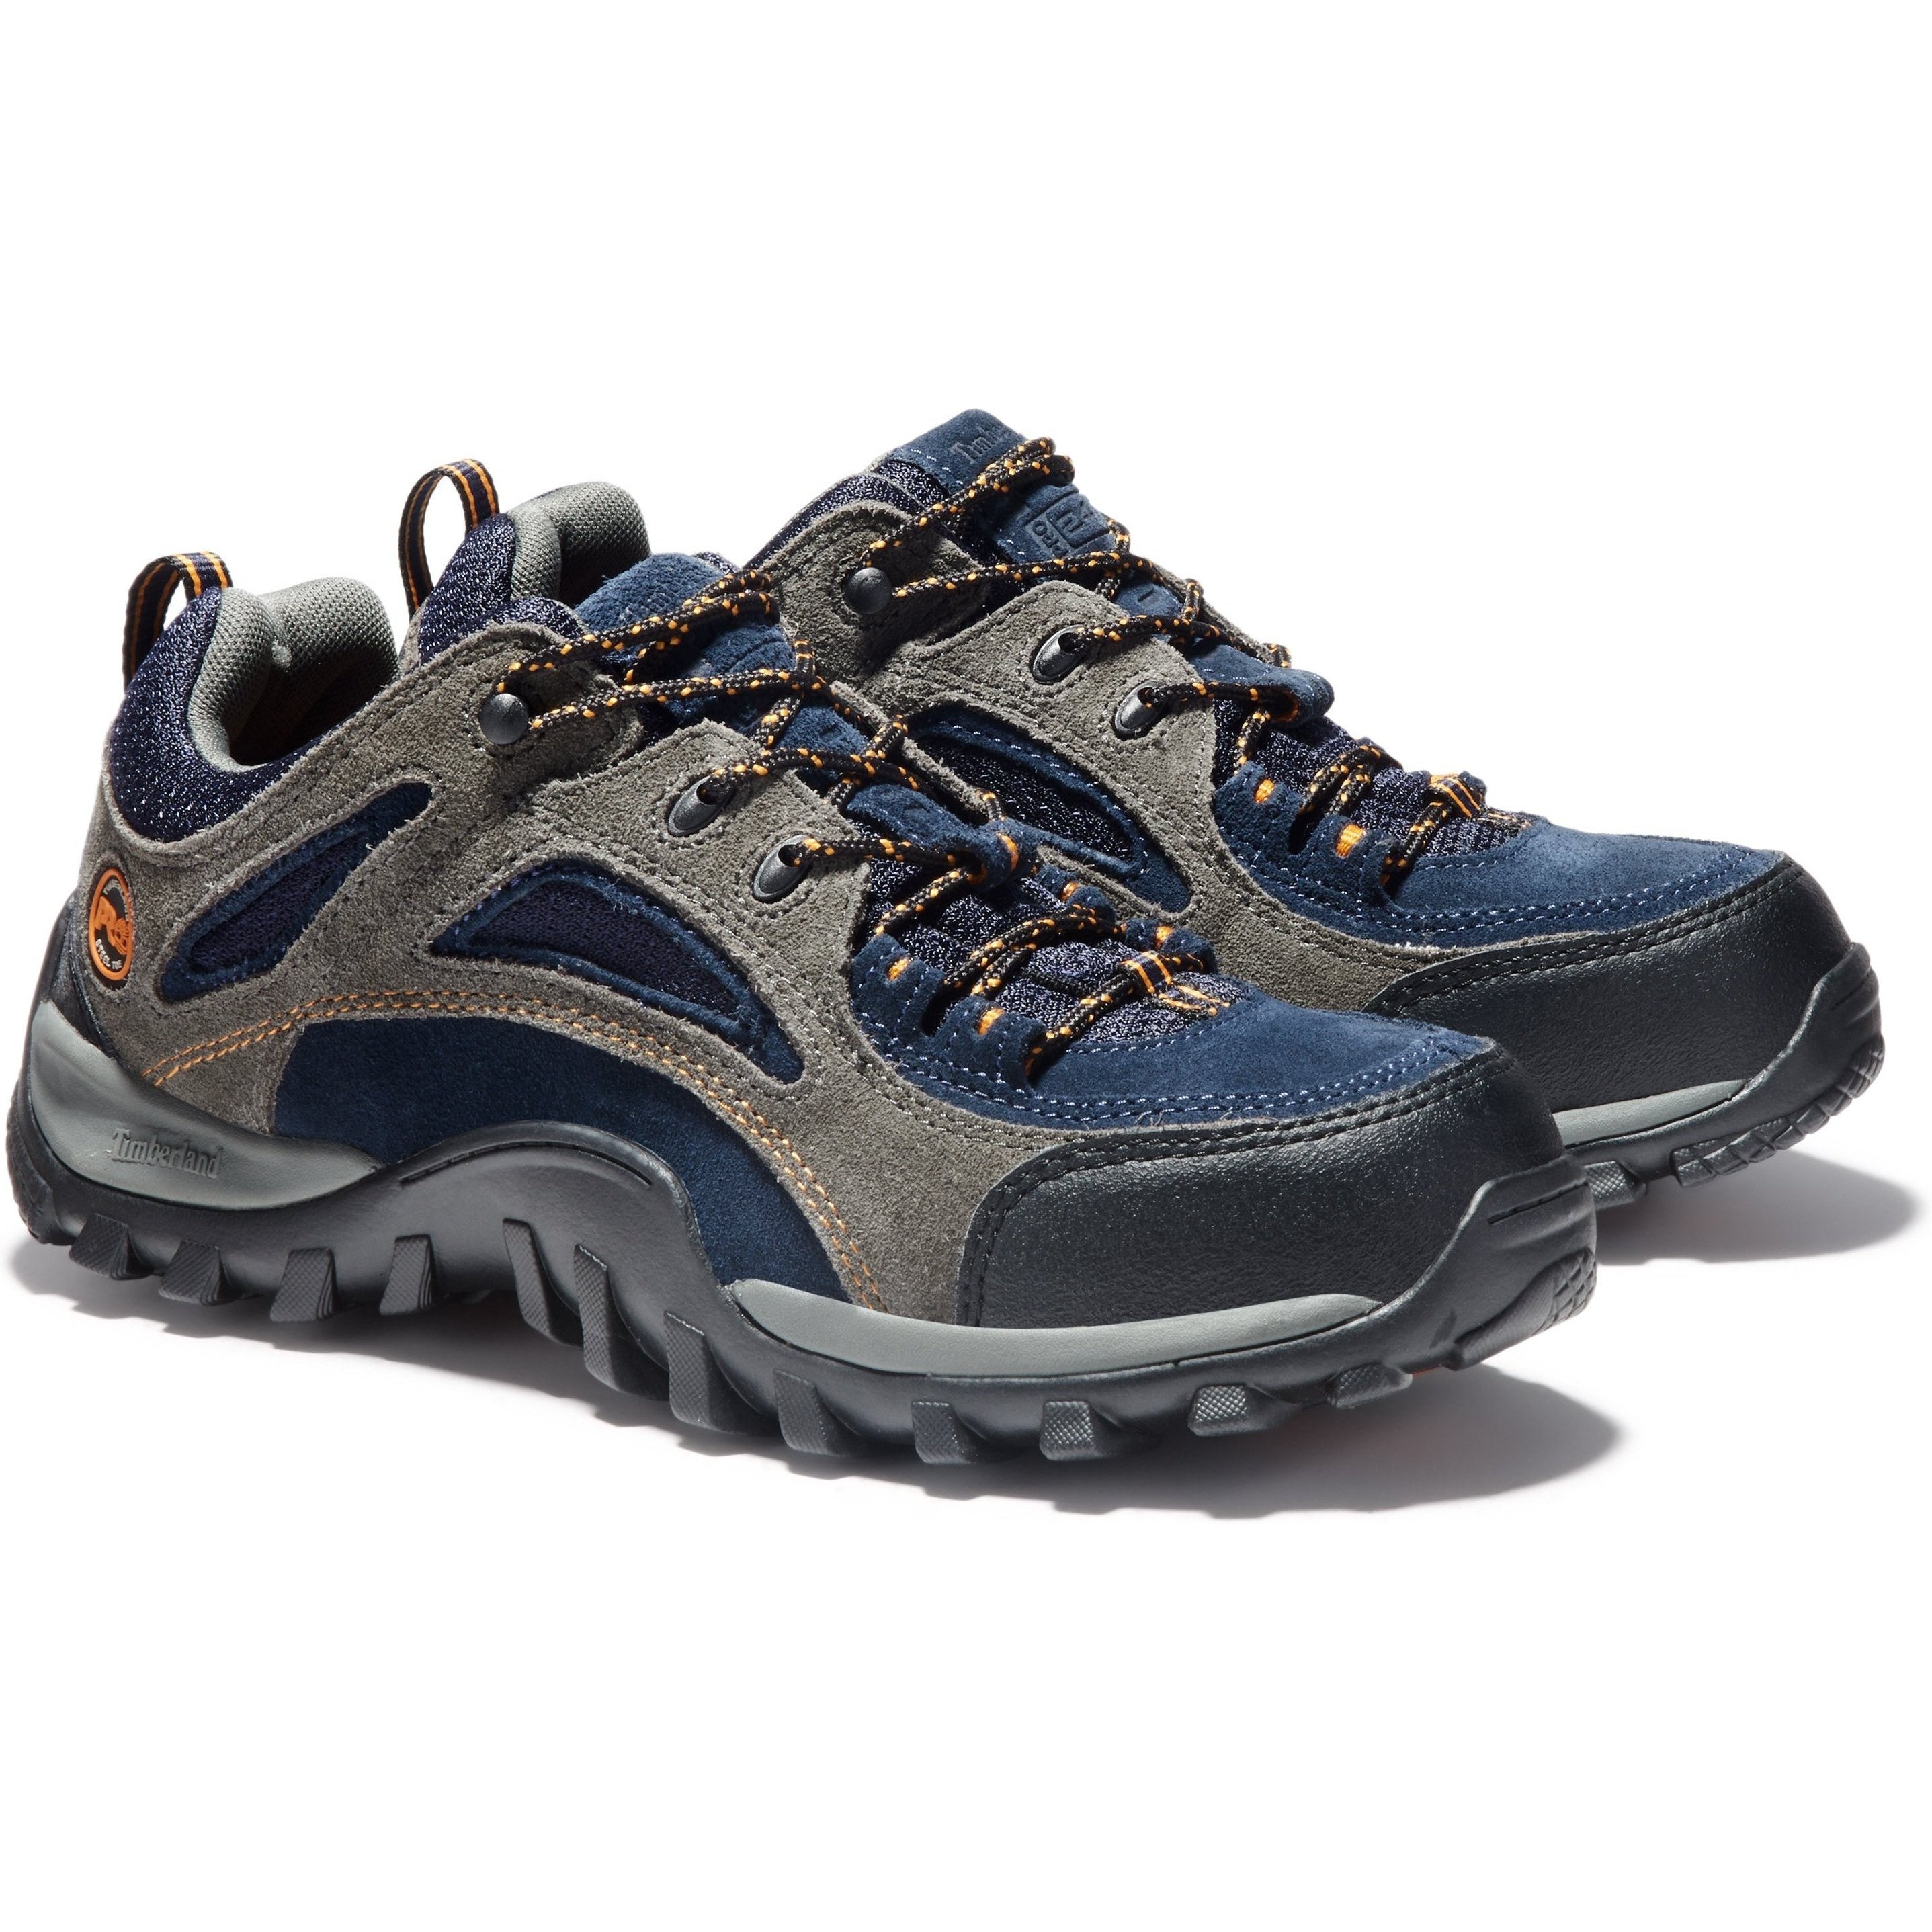 Timberland PRO Men's Mudsill Steel Toe Work Shoe - TB061009484 7 / Medium / Grey/Sapphire - Overlook Boots